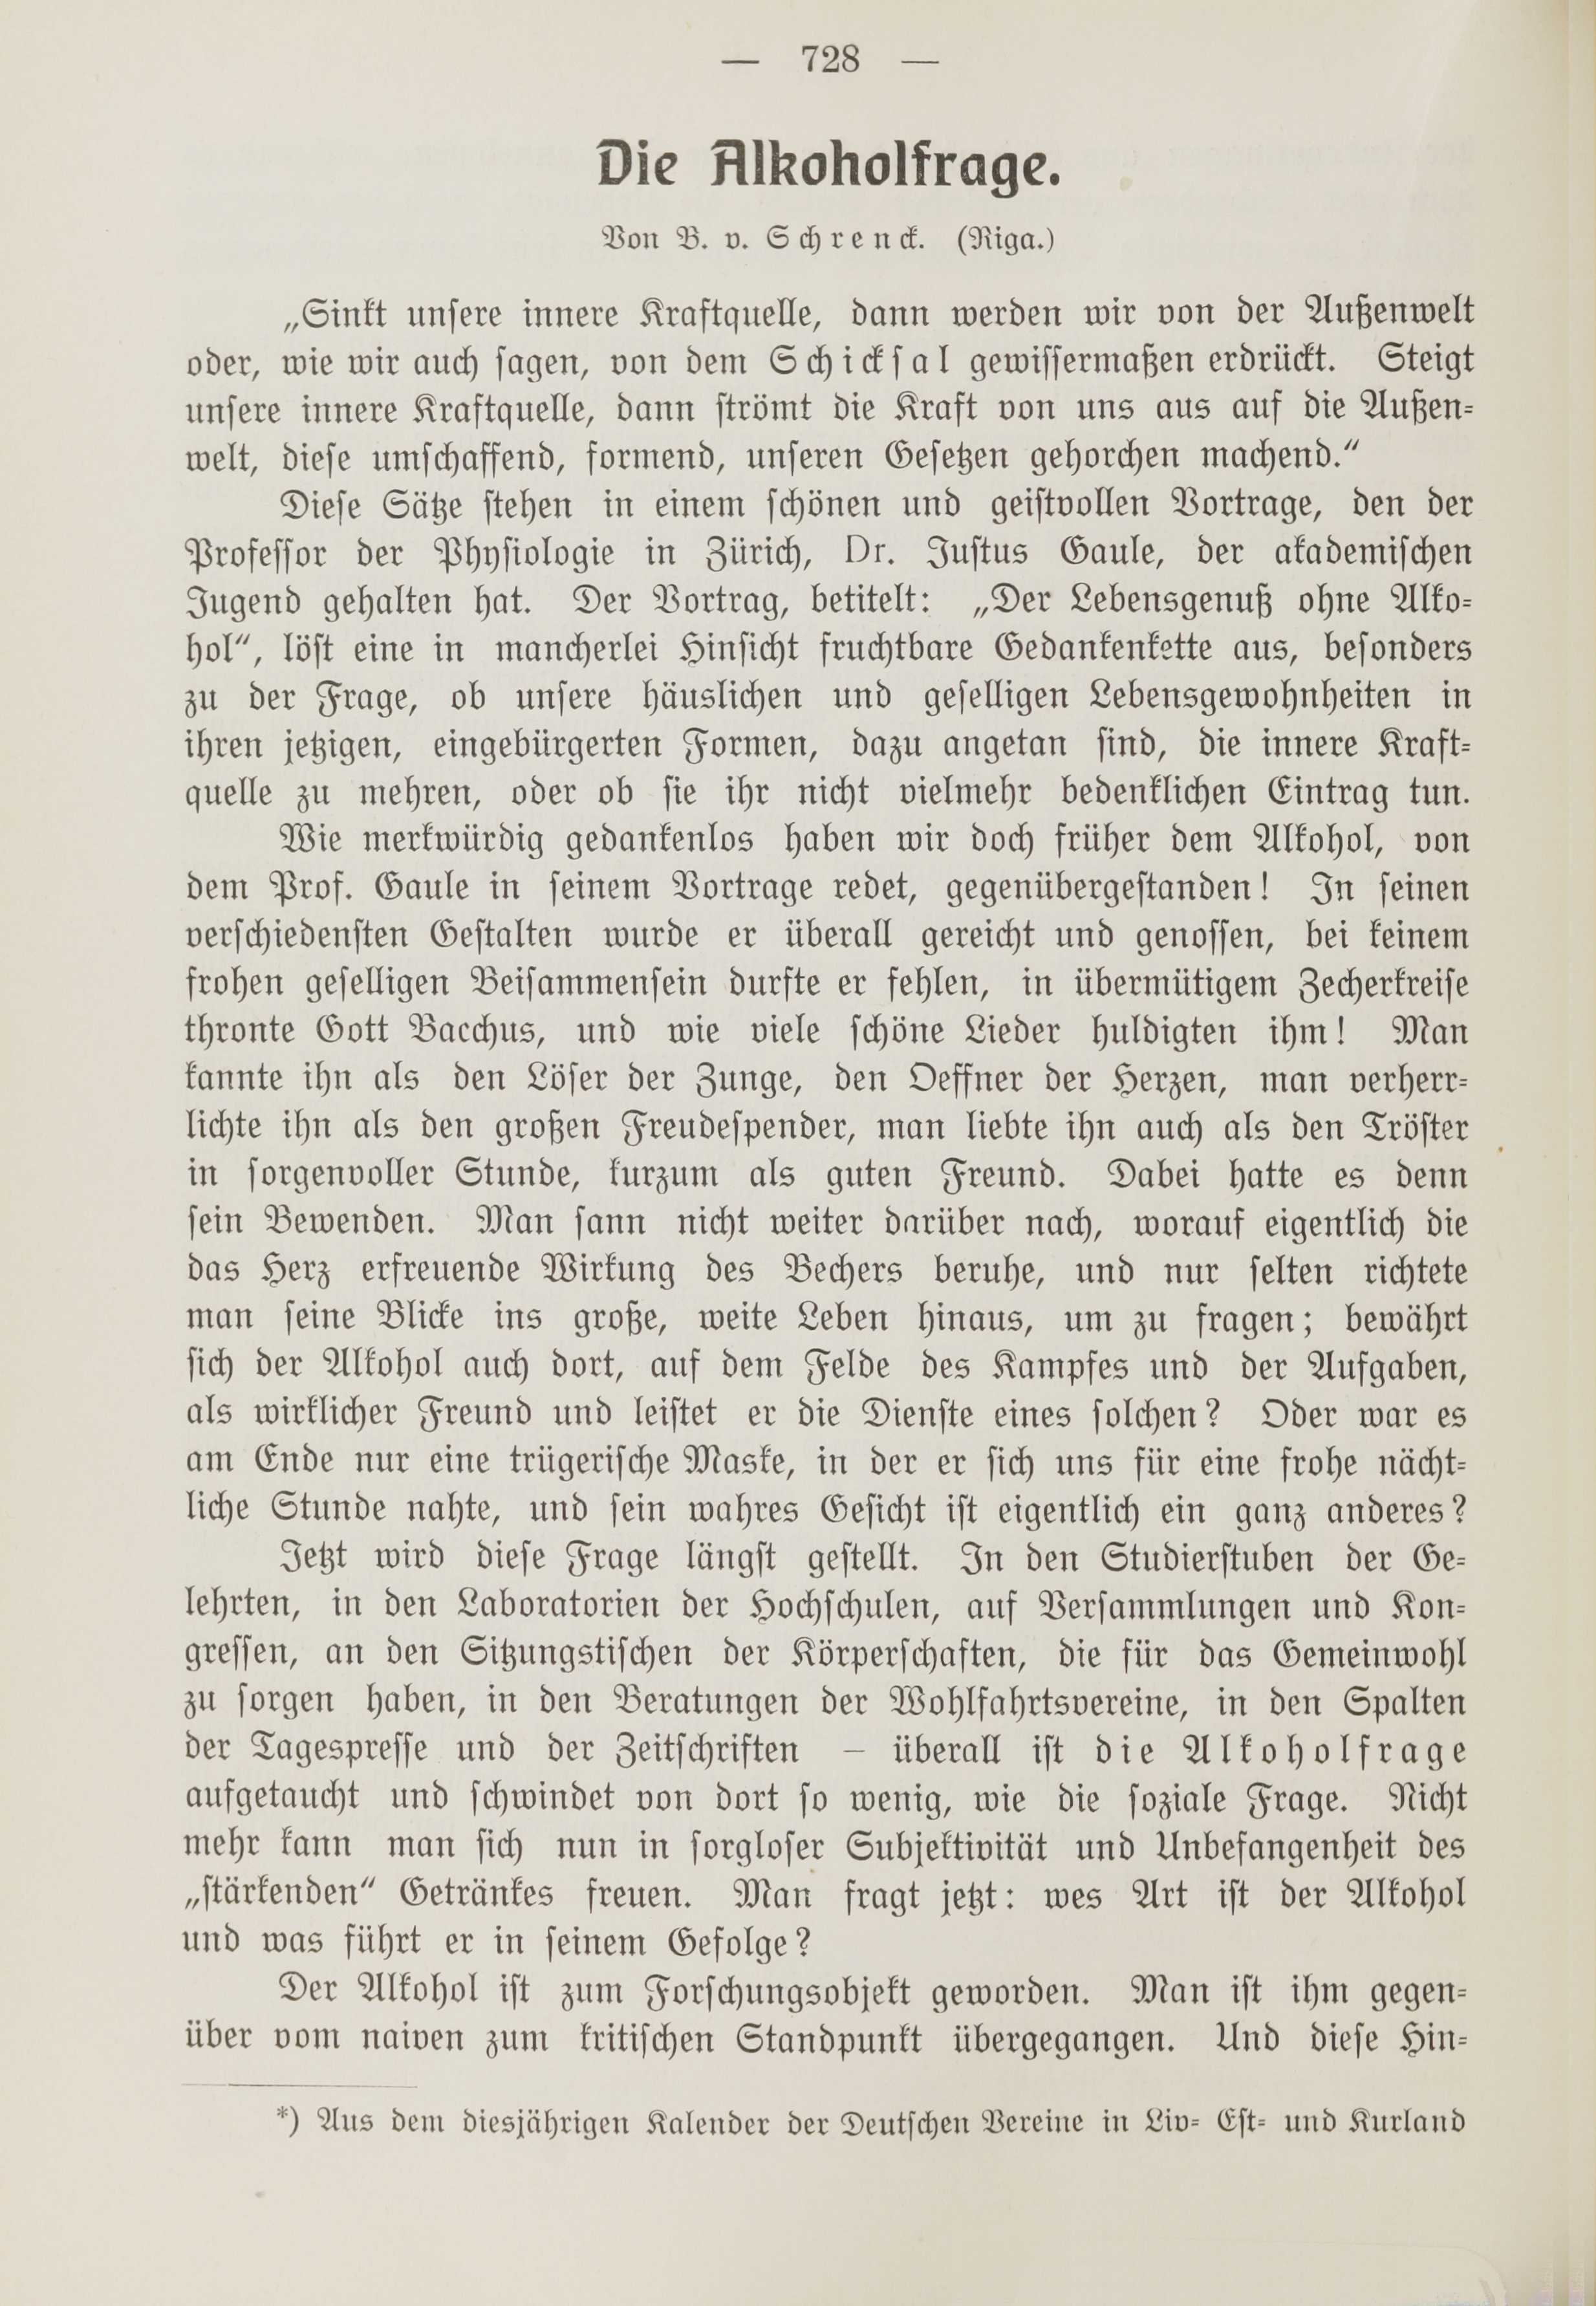 Die Alkoholfrage (1912) | 1. (728) Põhitekst